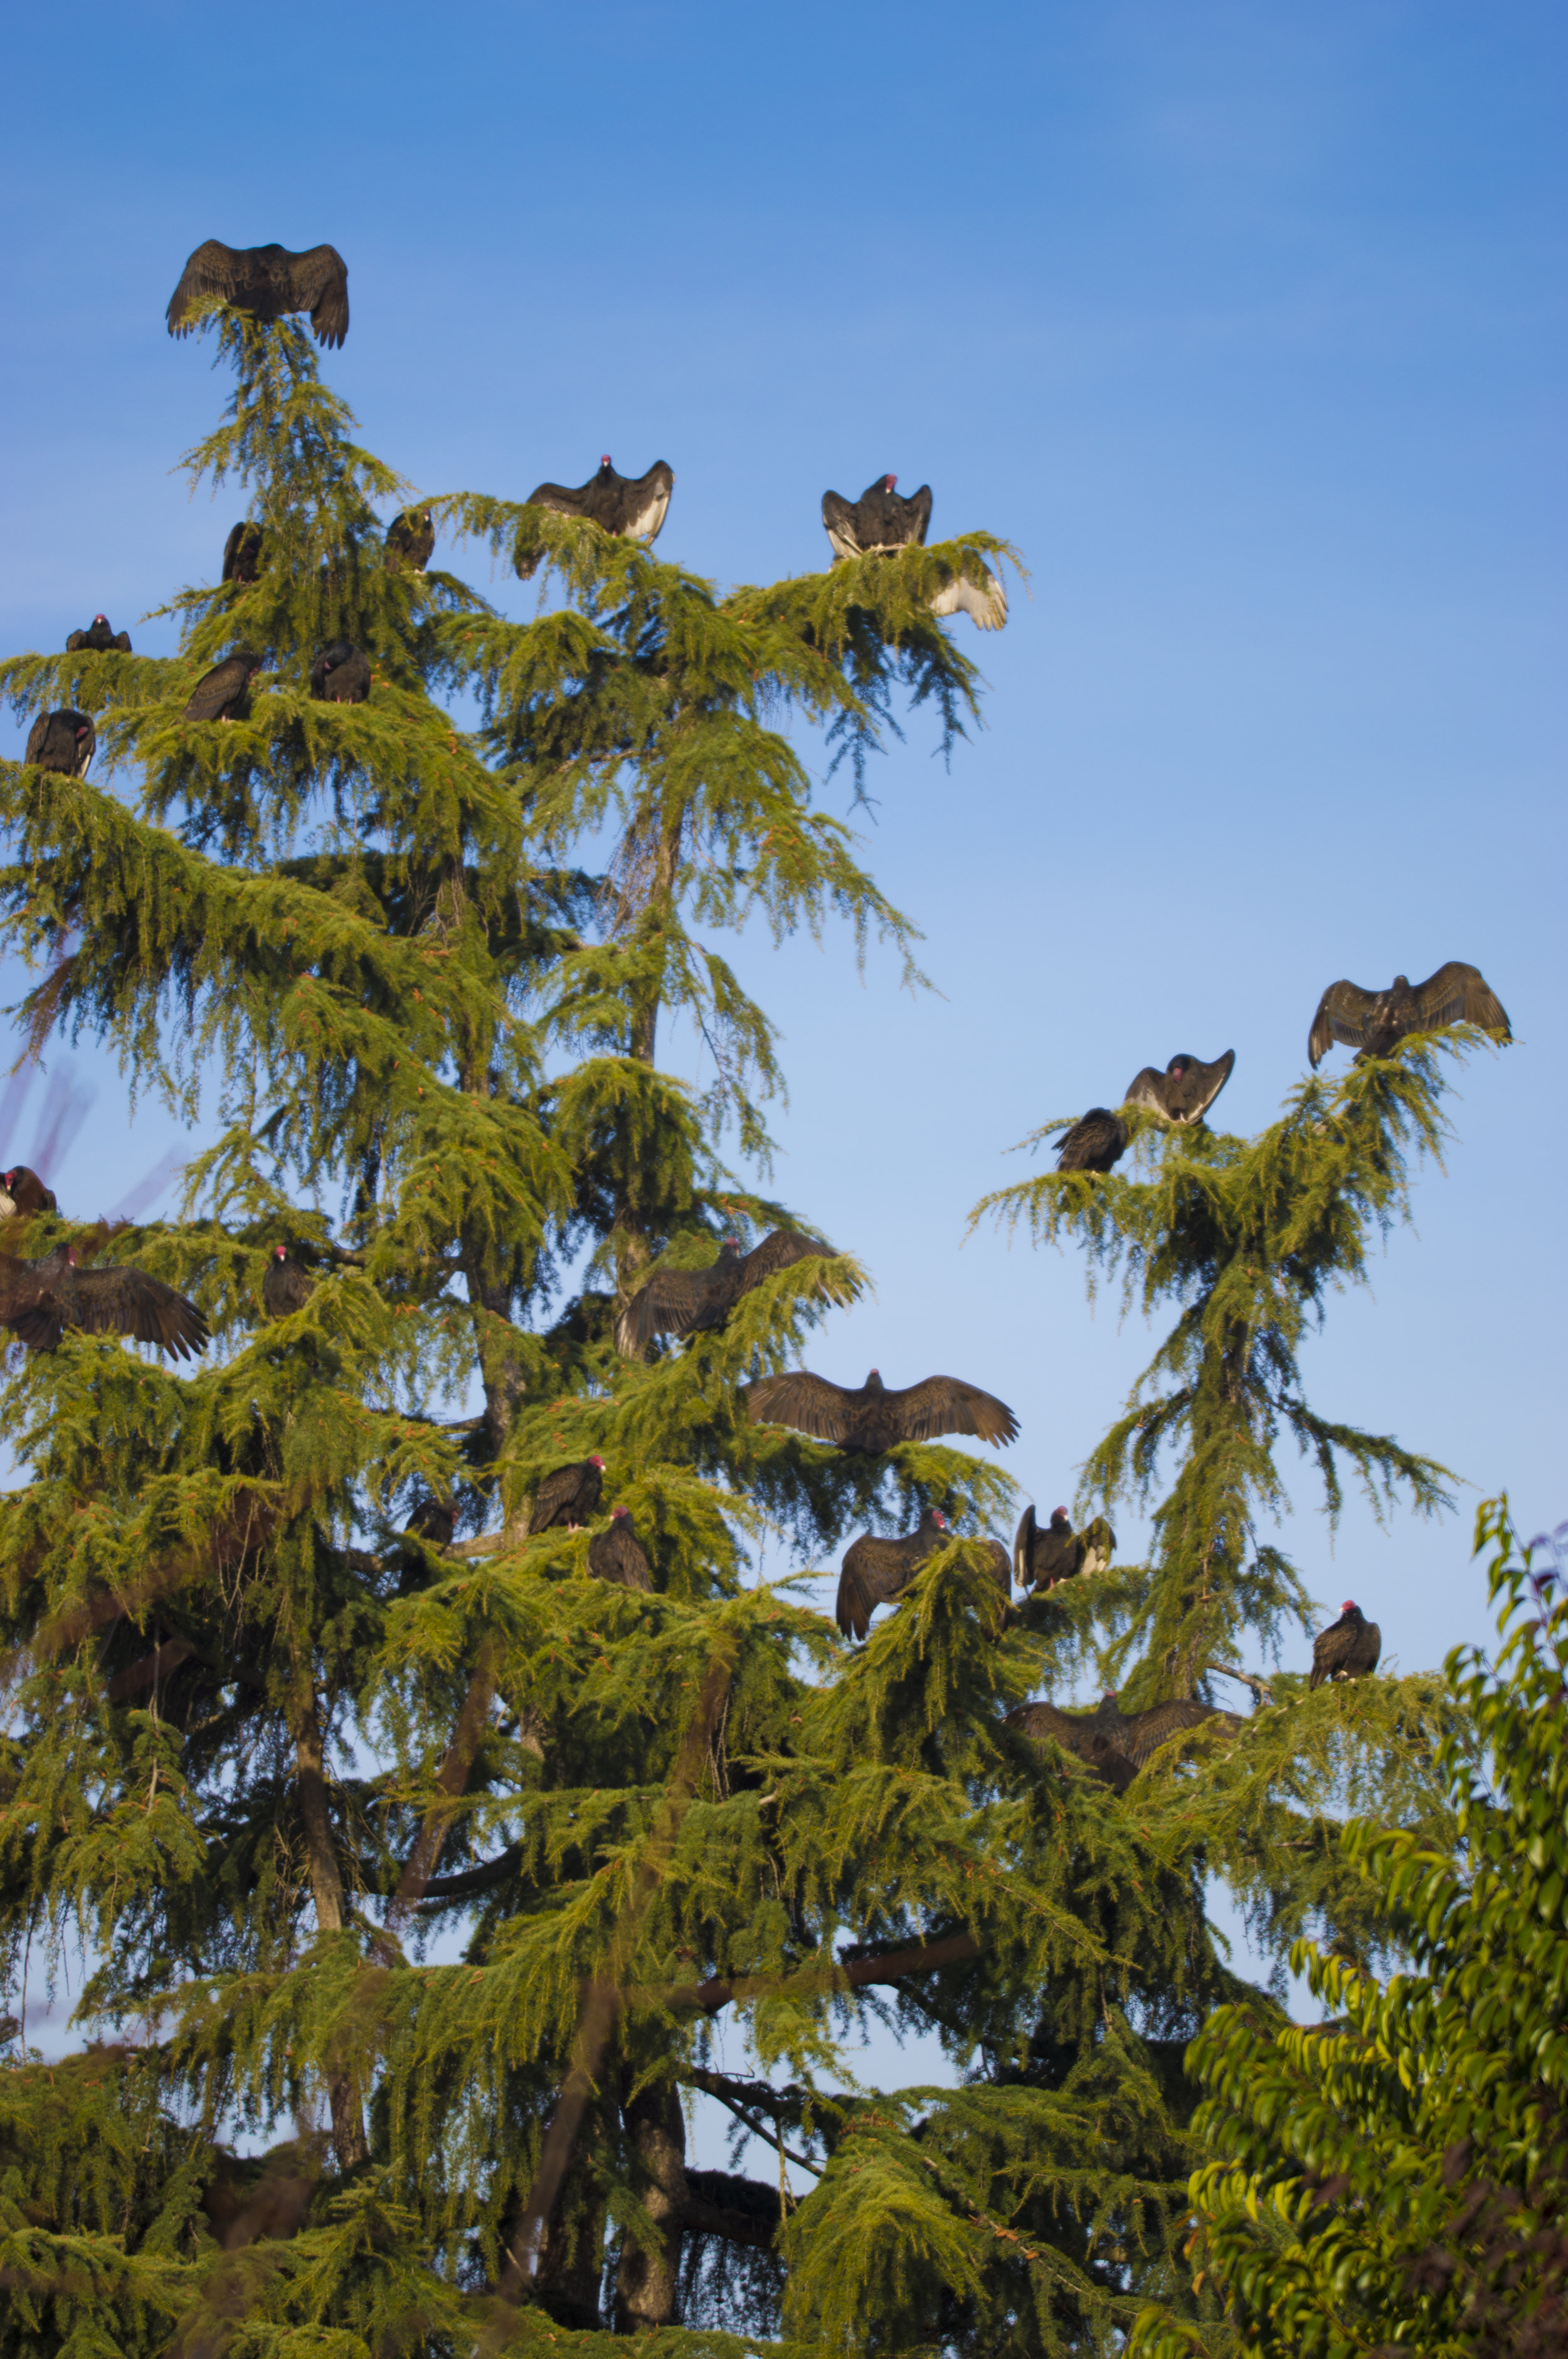 Turkey Vultures in San Jose, California